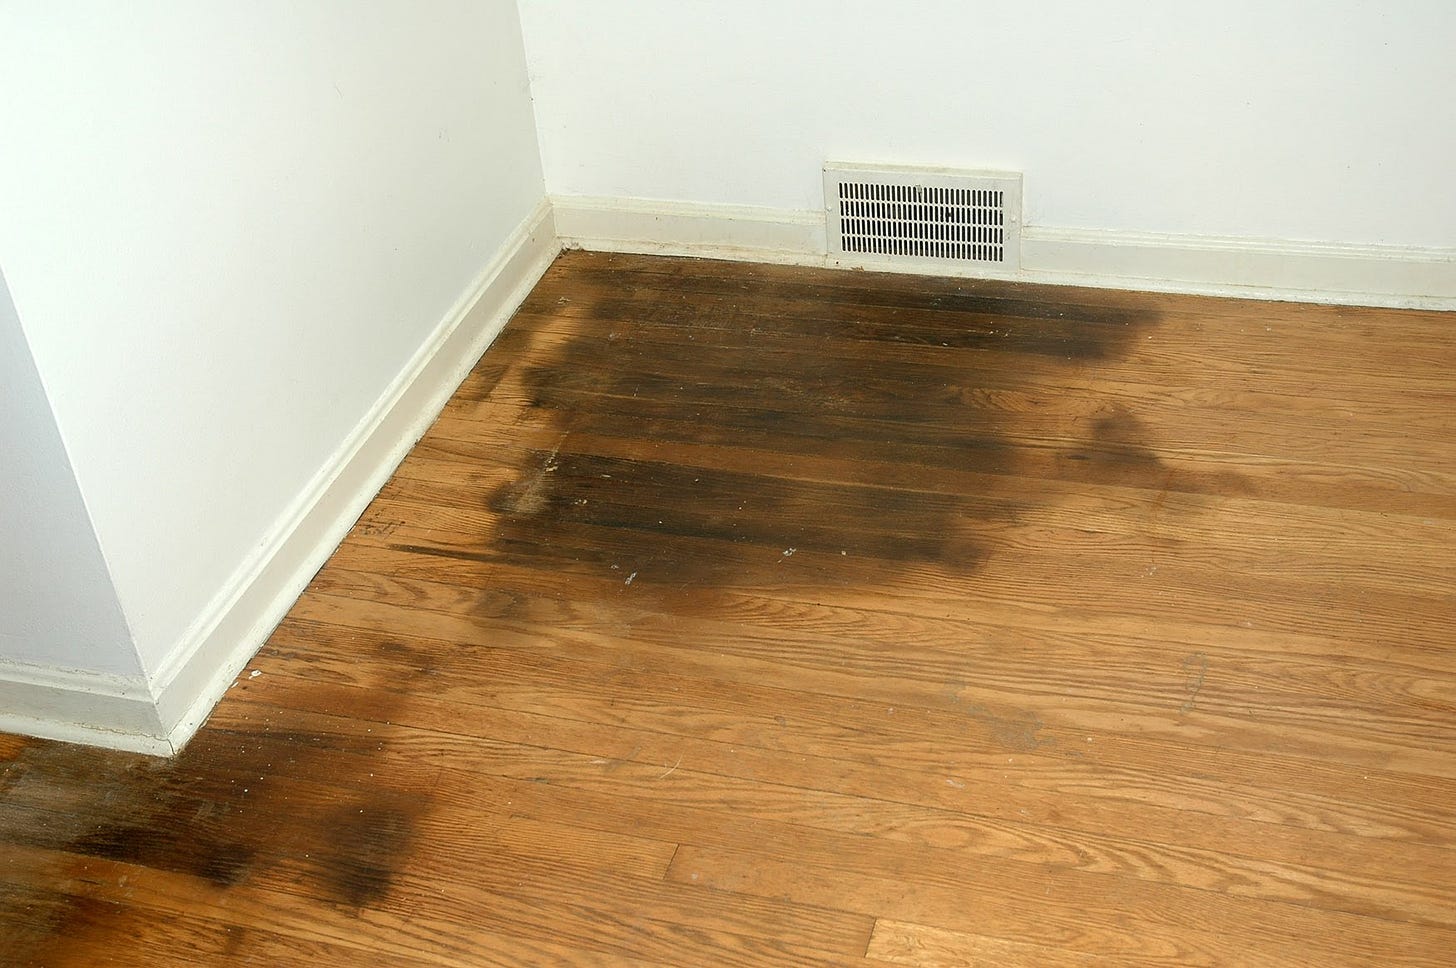 How To Remove Urine From Hardwood Floors? - Northside Floors